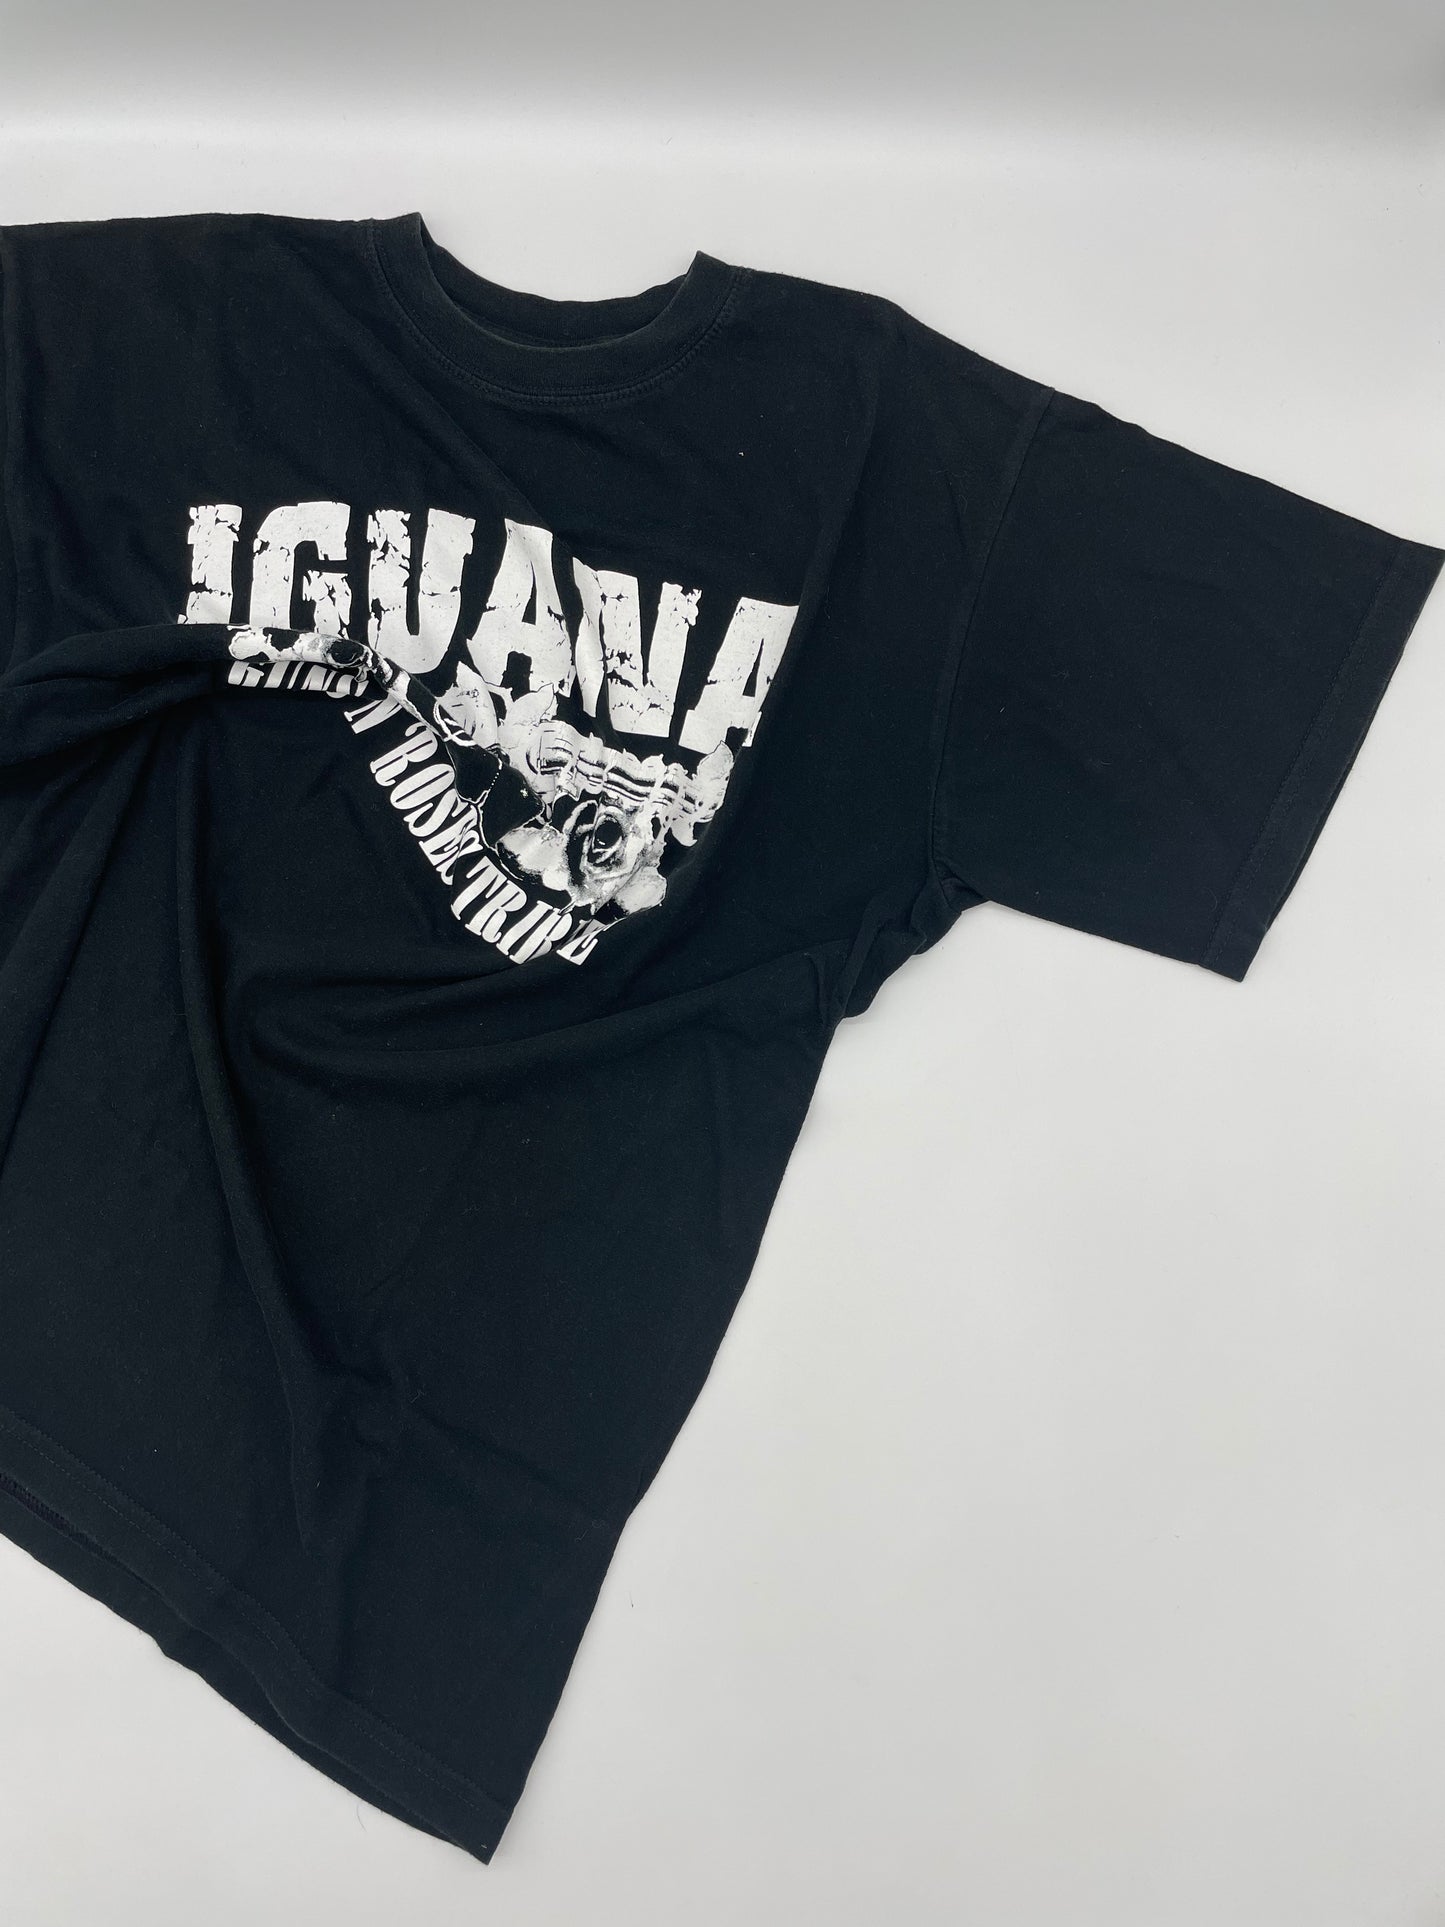 Iguana Guns n Roses Tribute T-Shirt